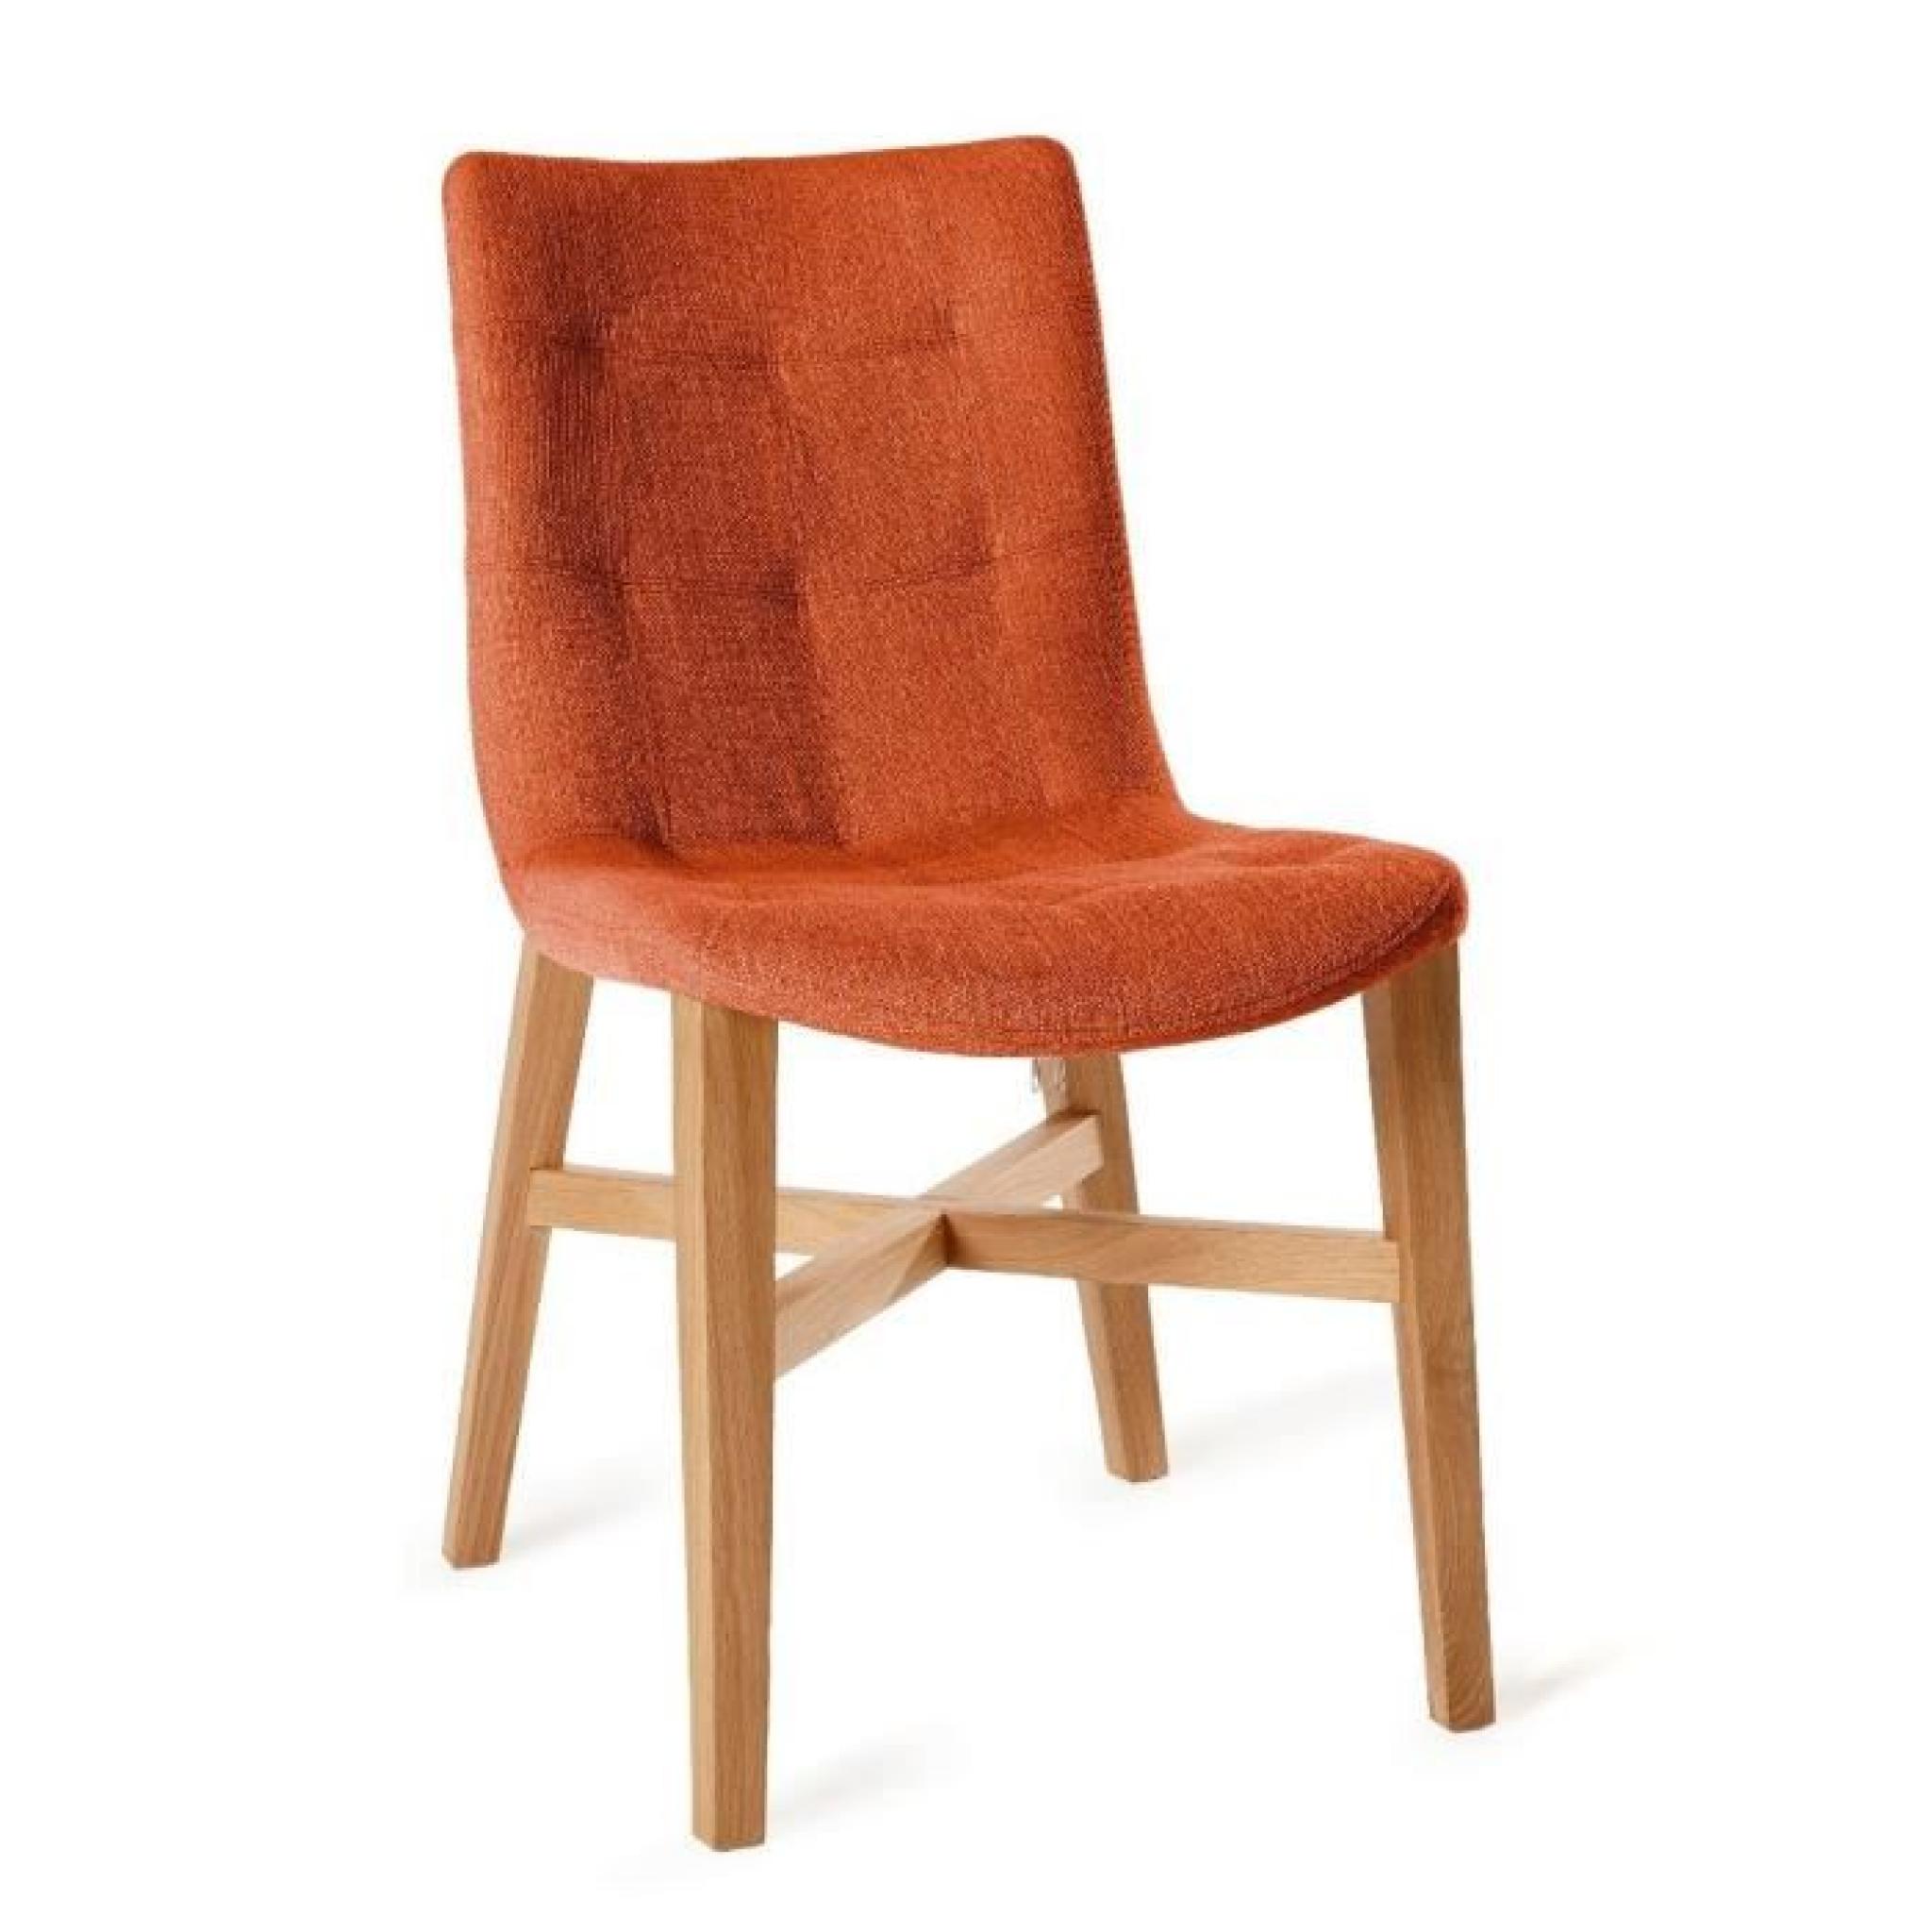 Chaise design FLORENCE orange en chêne massif